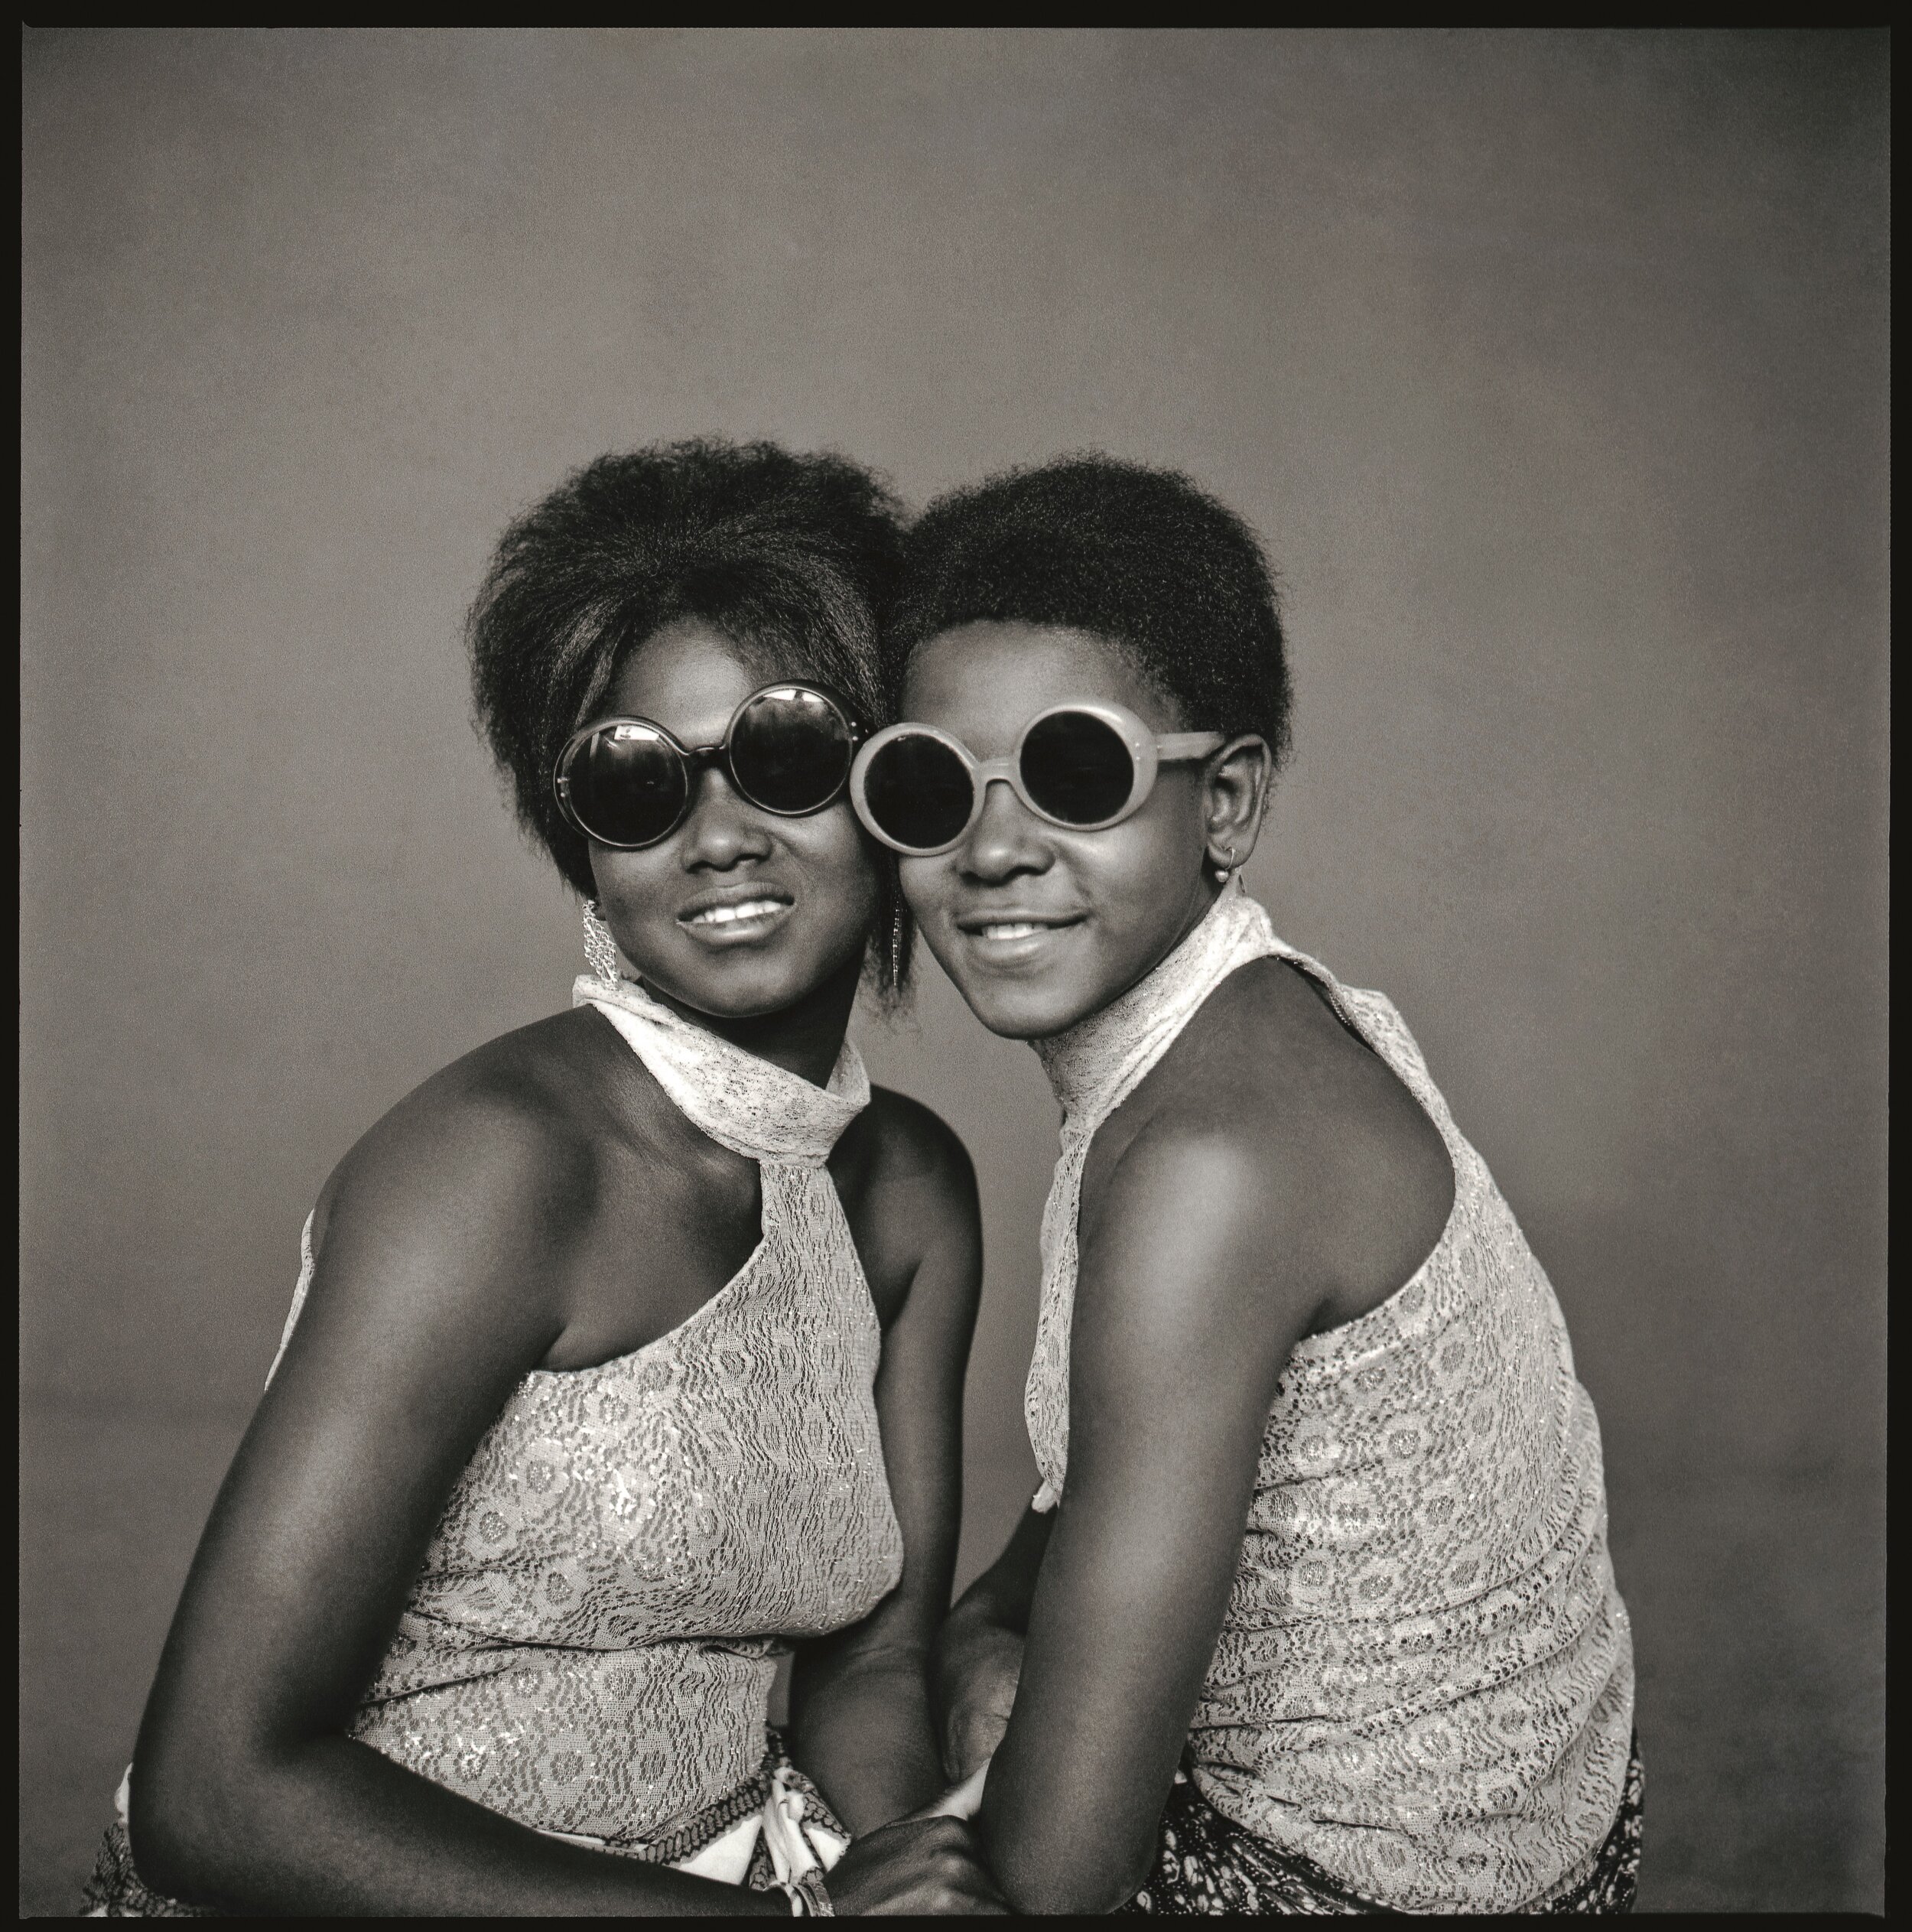 The Young Ye-Ye Girls with Sunglasses, 1965, Abdourahmane Sakaly, Mali